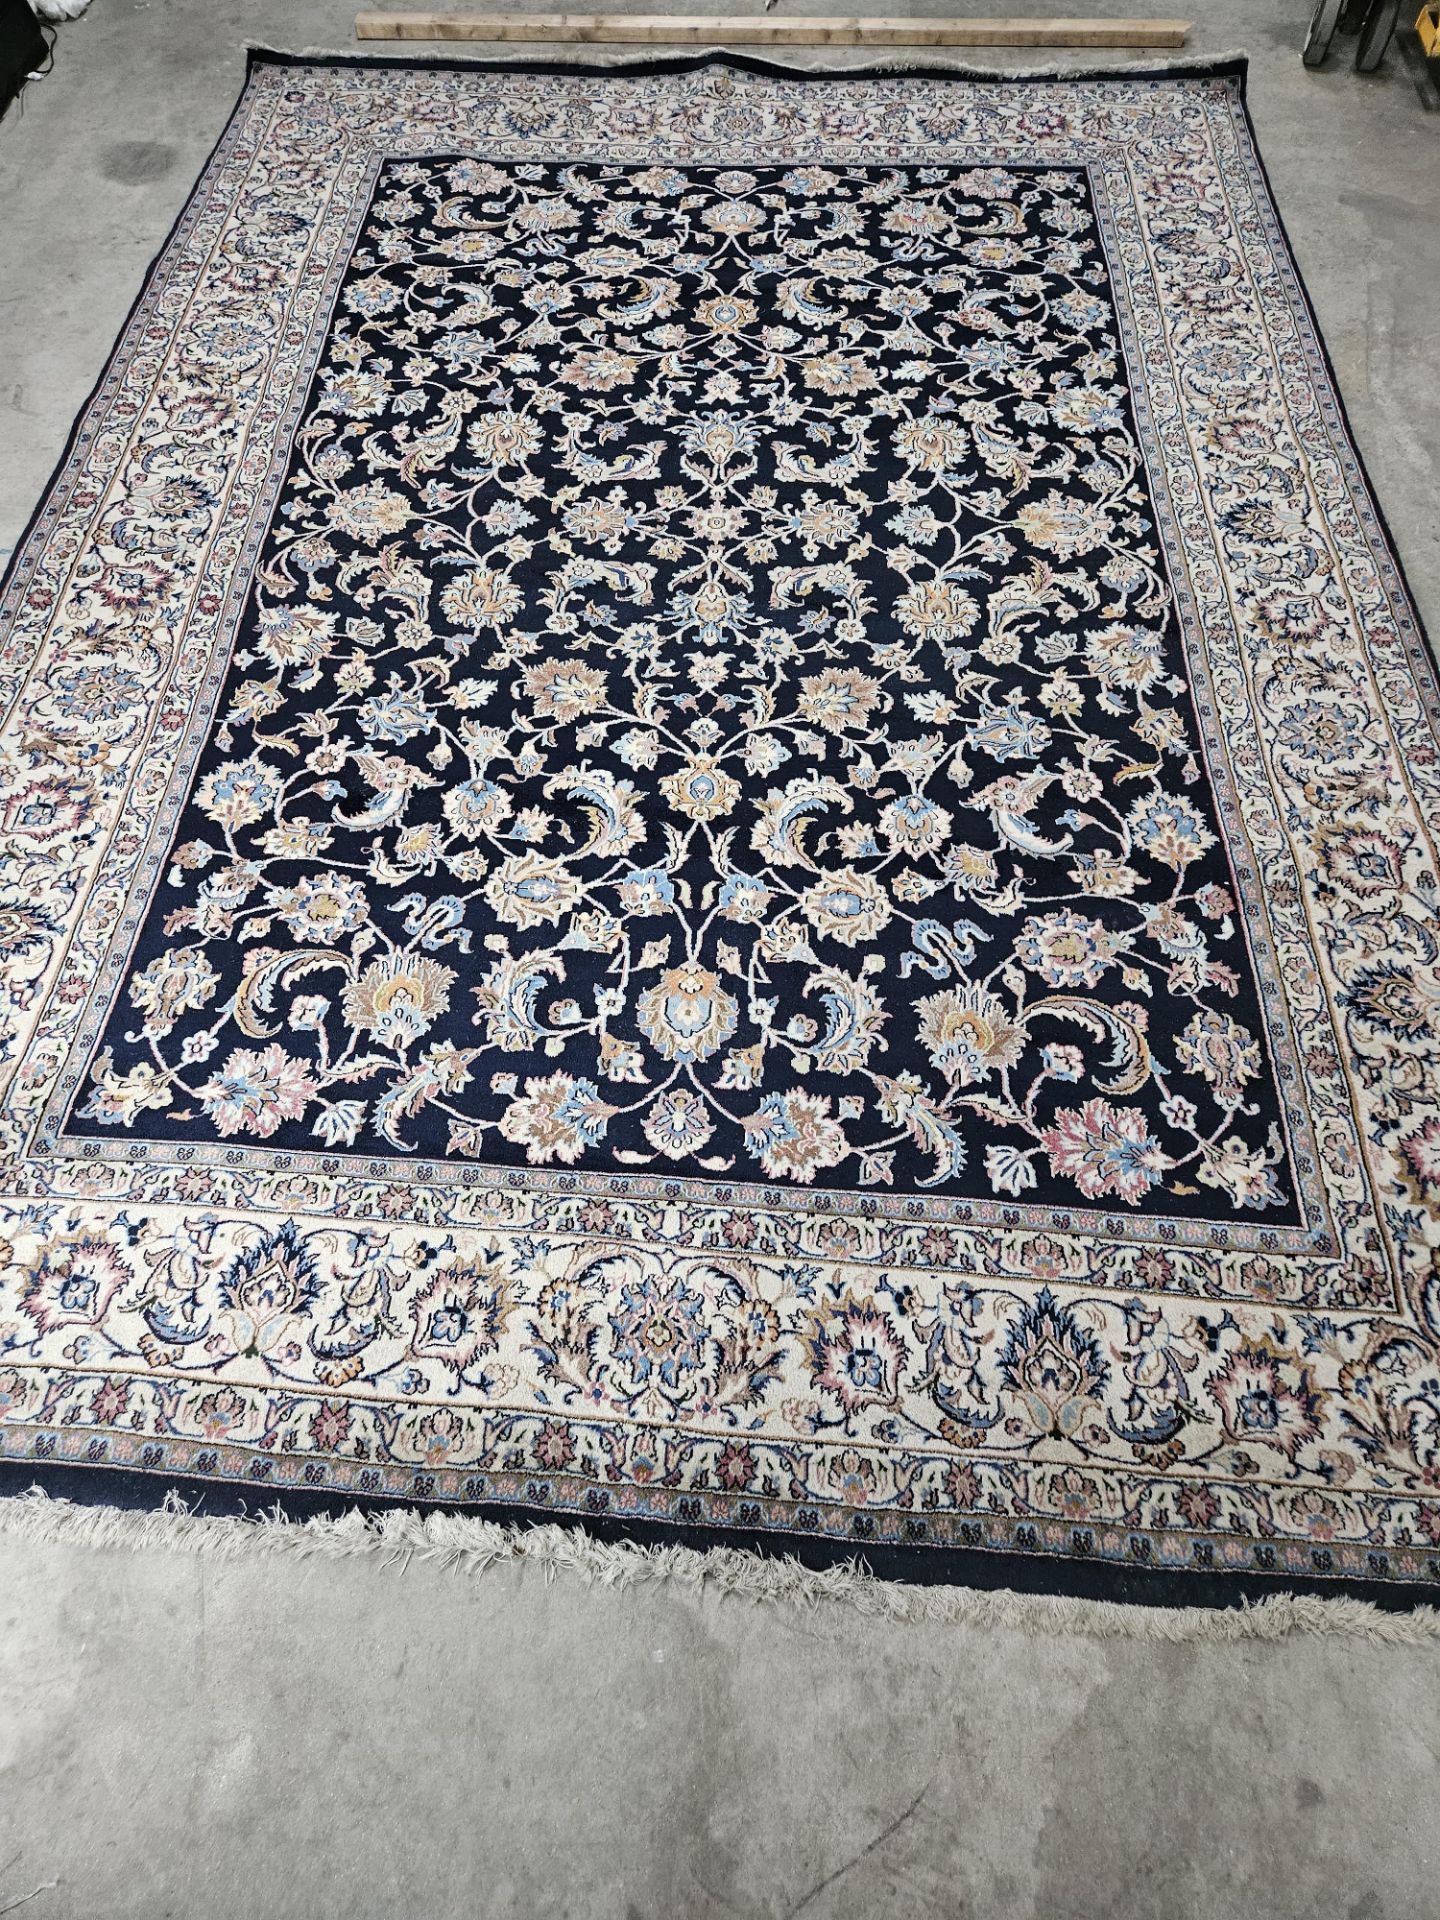 * Meshed Iranian rug - 3.15m x 2m - Image 2 of 4